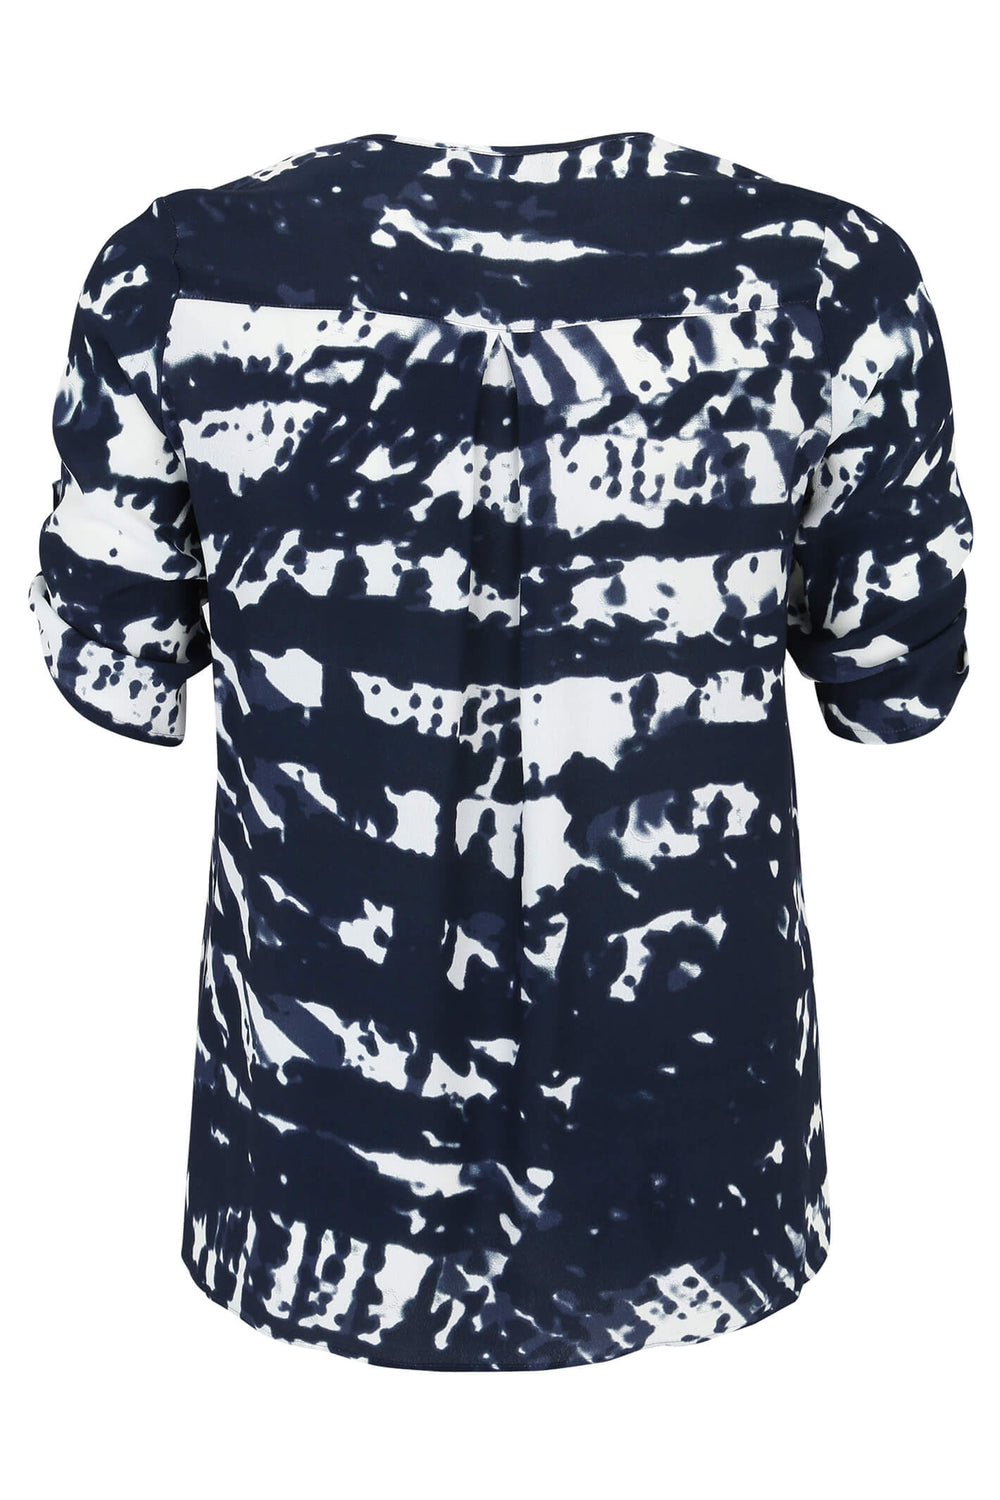 Doris Streich 220 508 Navy Print Shirt Style Blouse - Shirley Allum Boutique